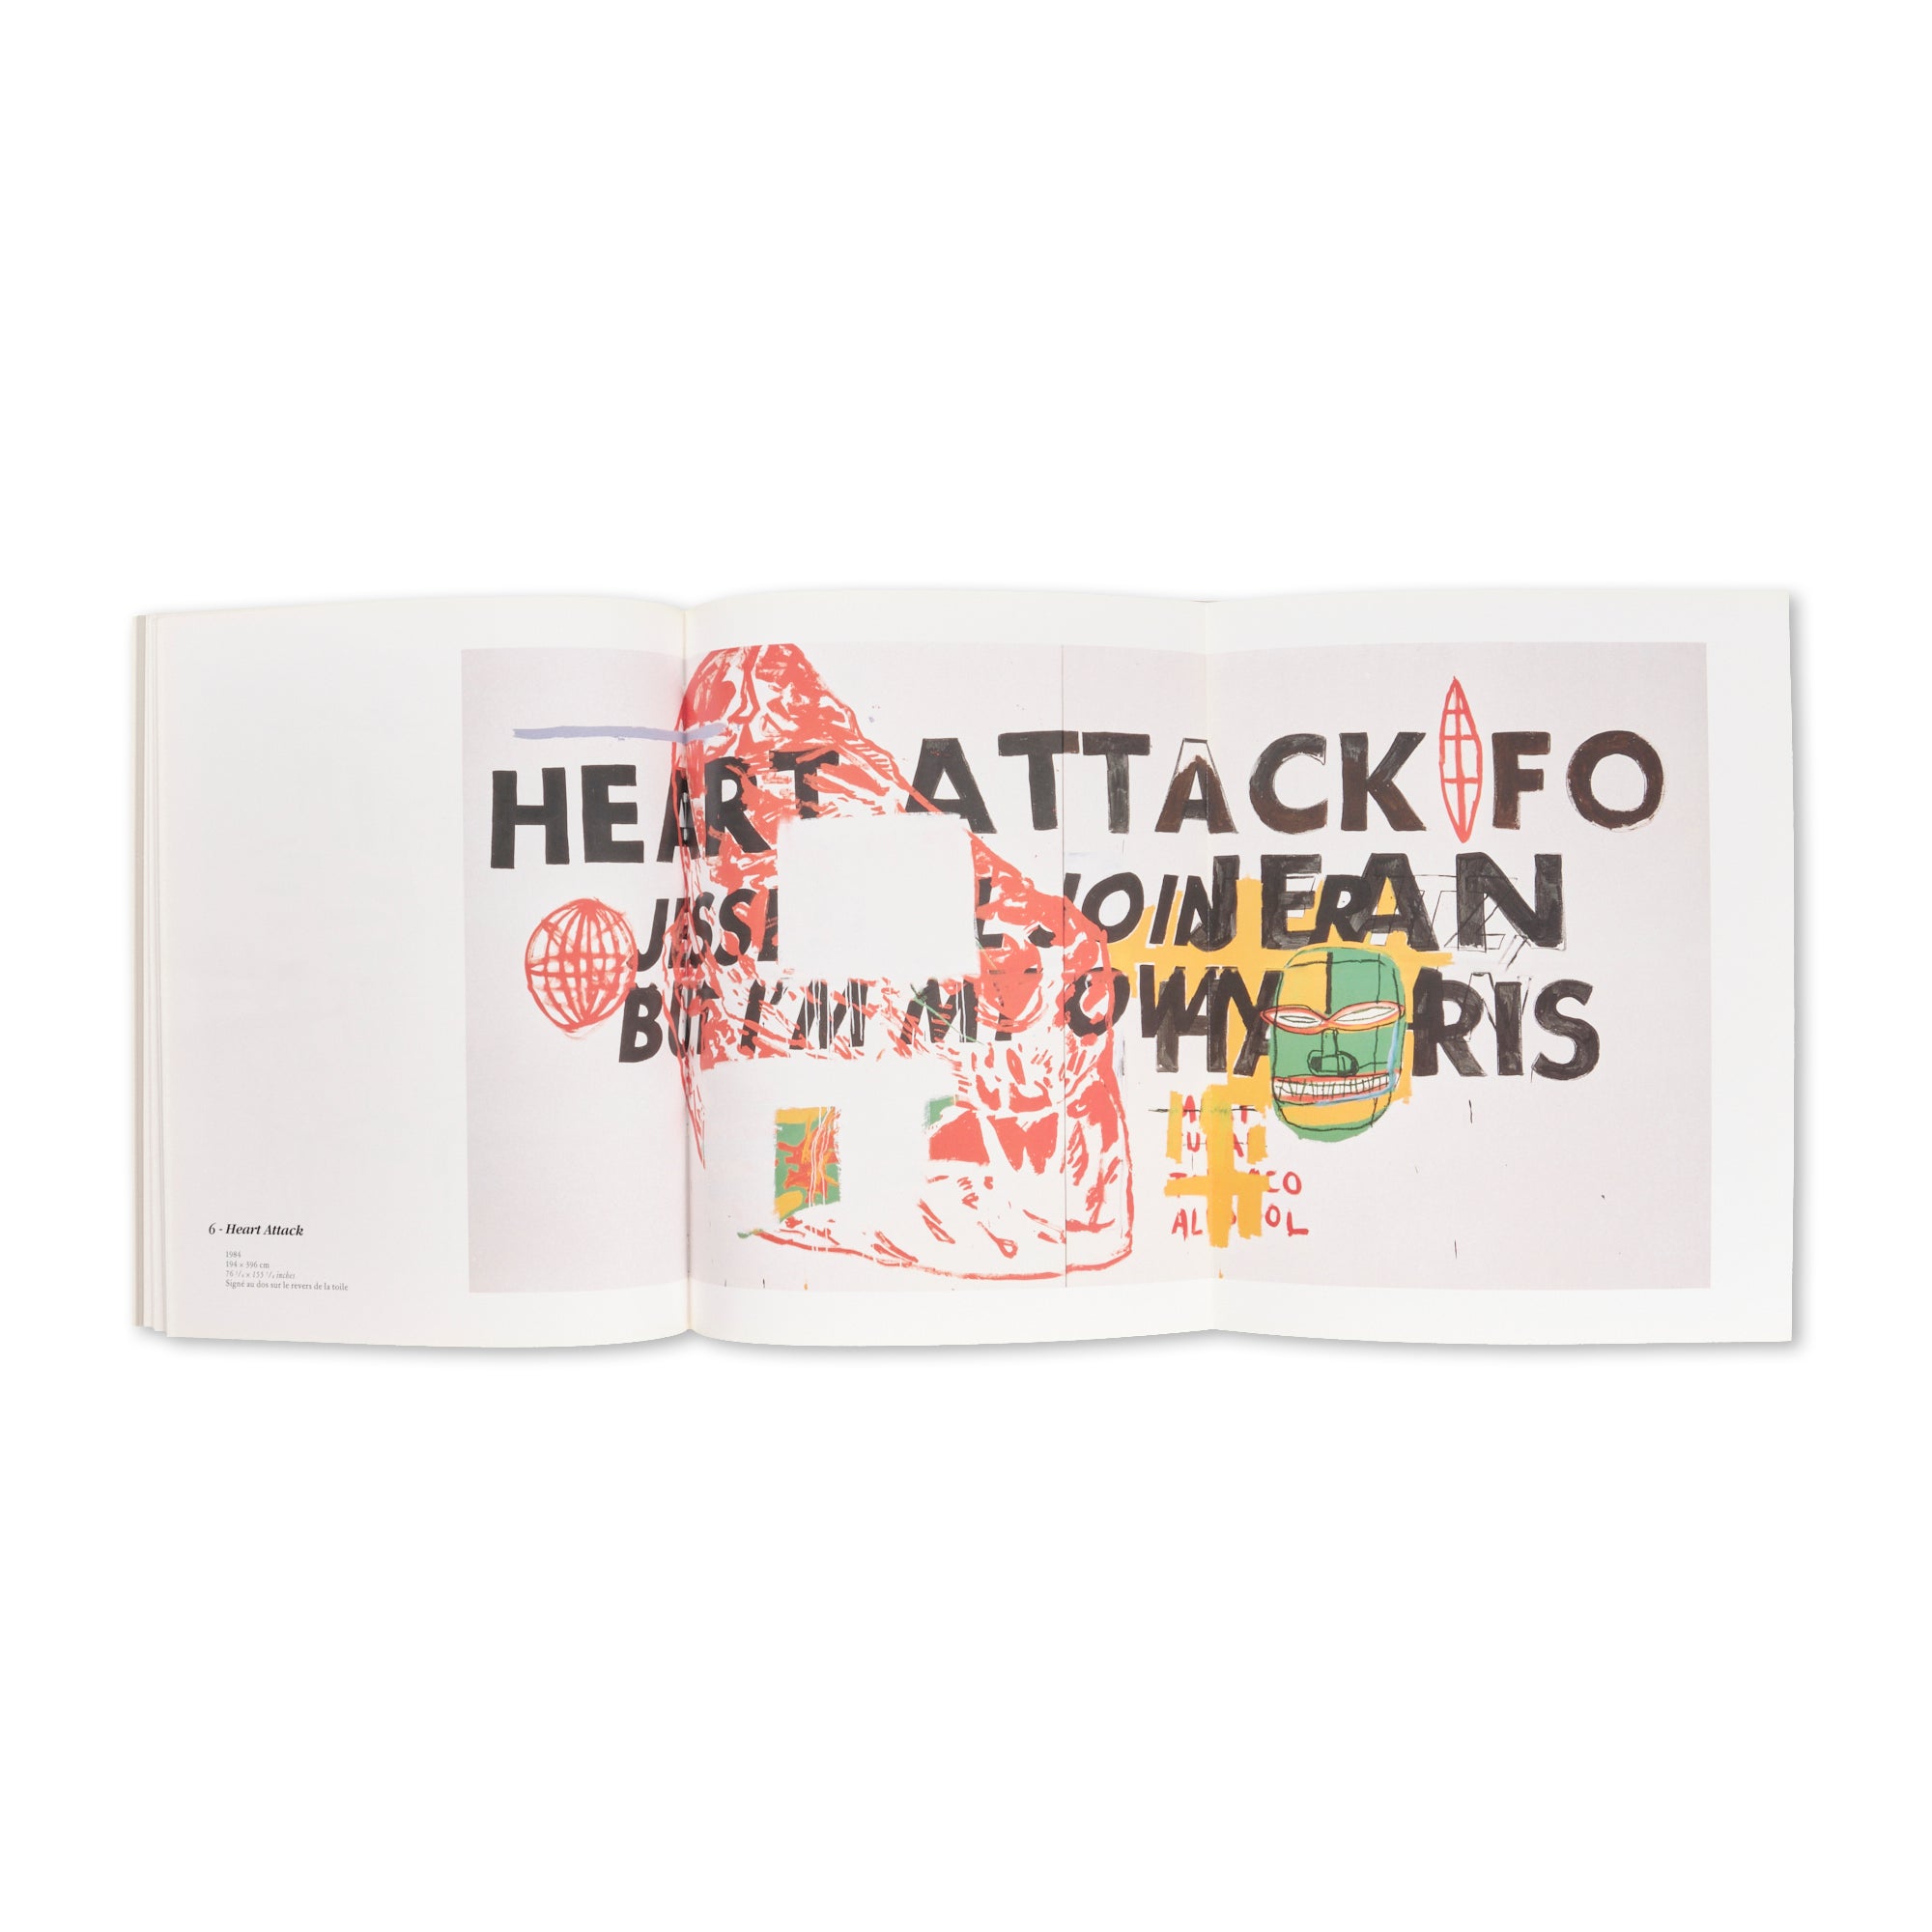 Andy Warhol / Jean-Michel Basquiat - Collaborations